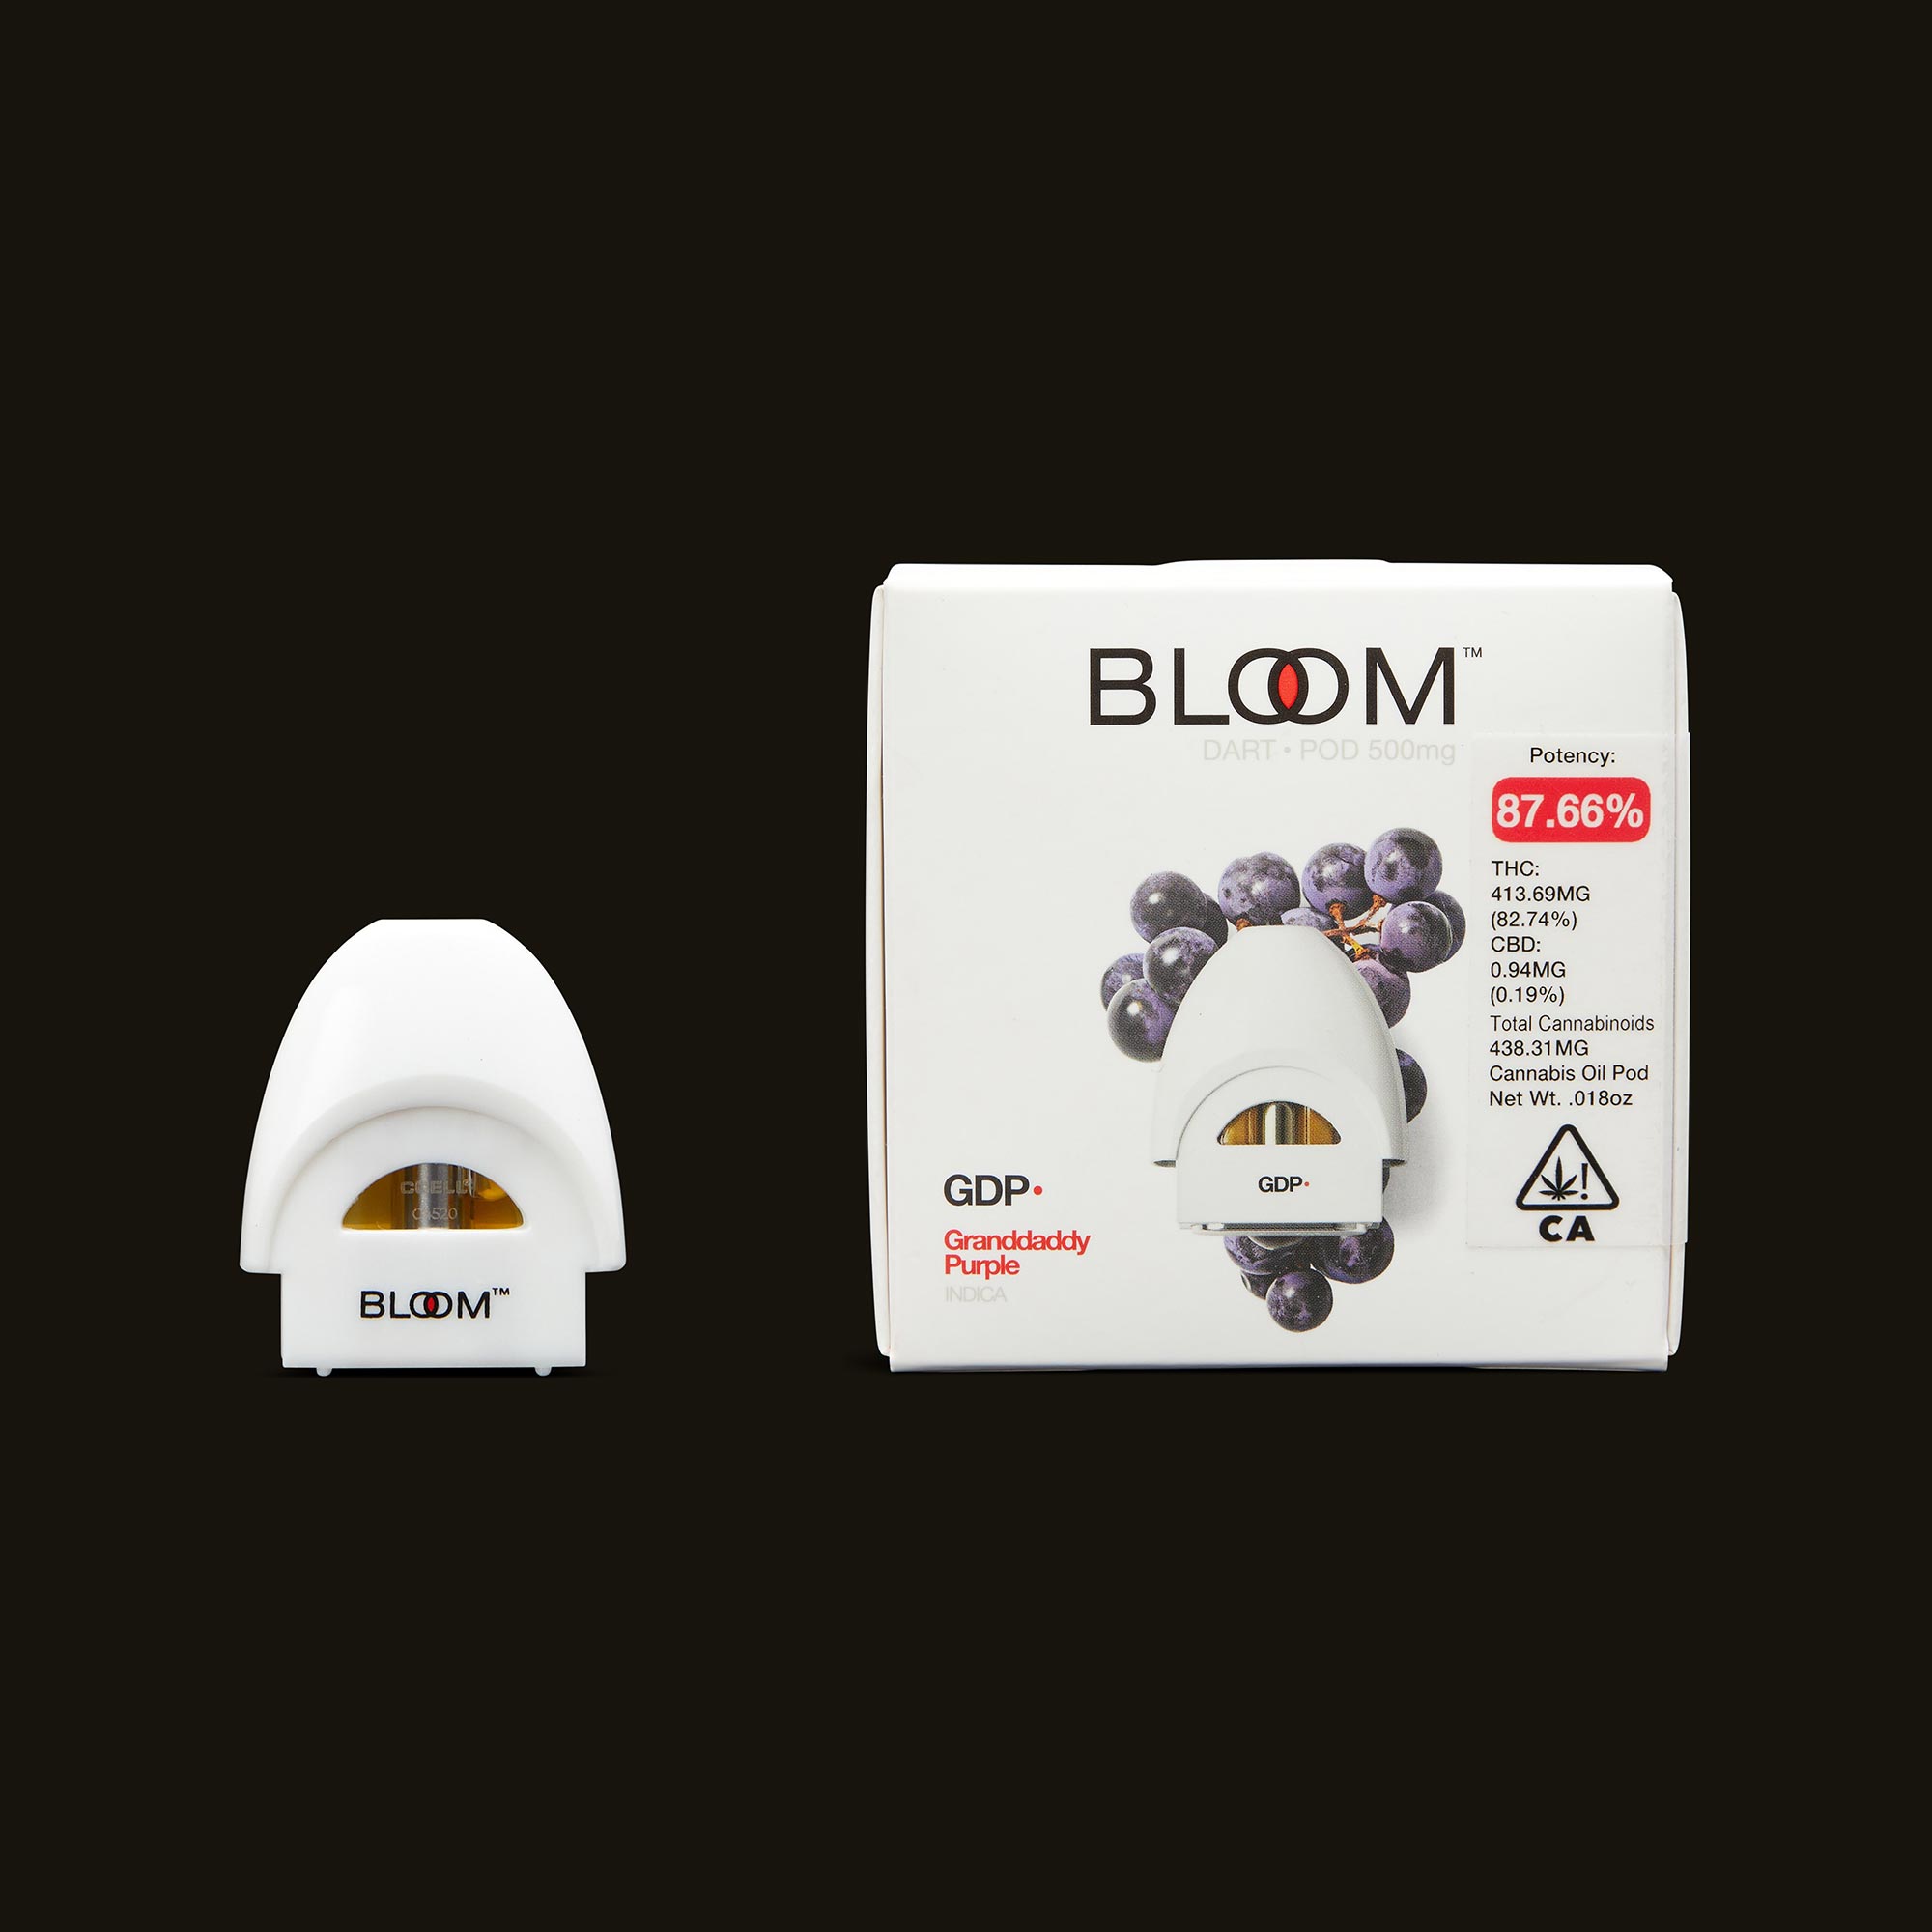 Bloom-Graddaddy-Purple-Dart-Pod3365-1-2219929.jpg